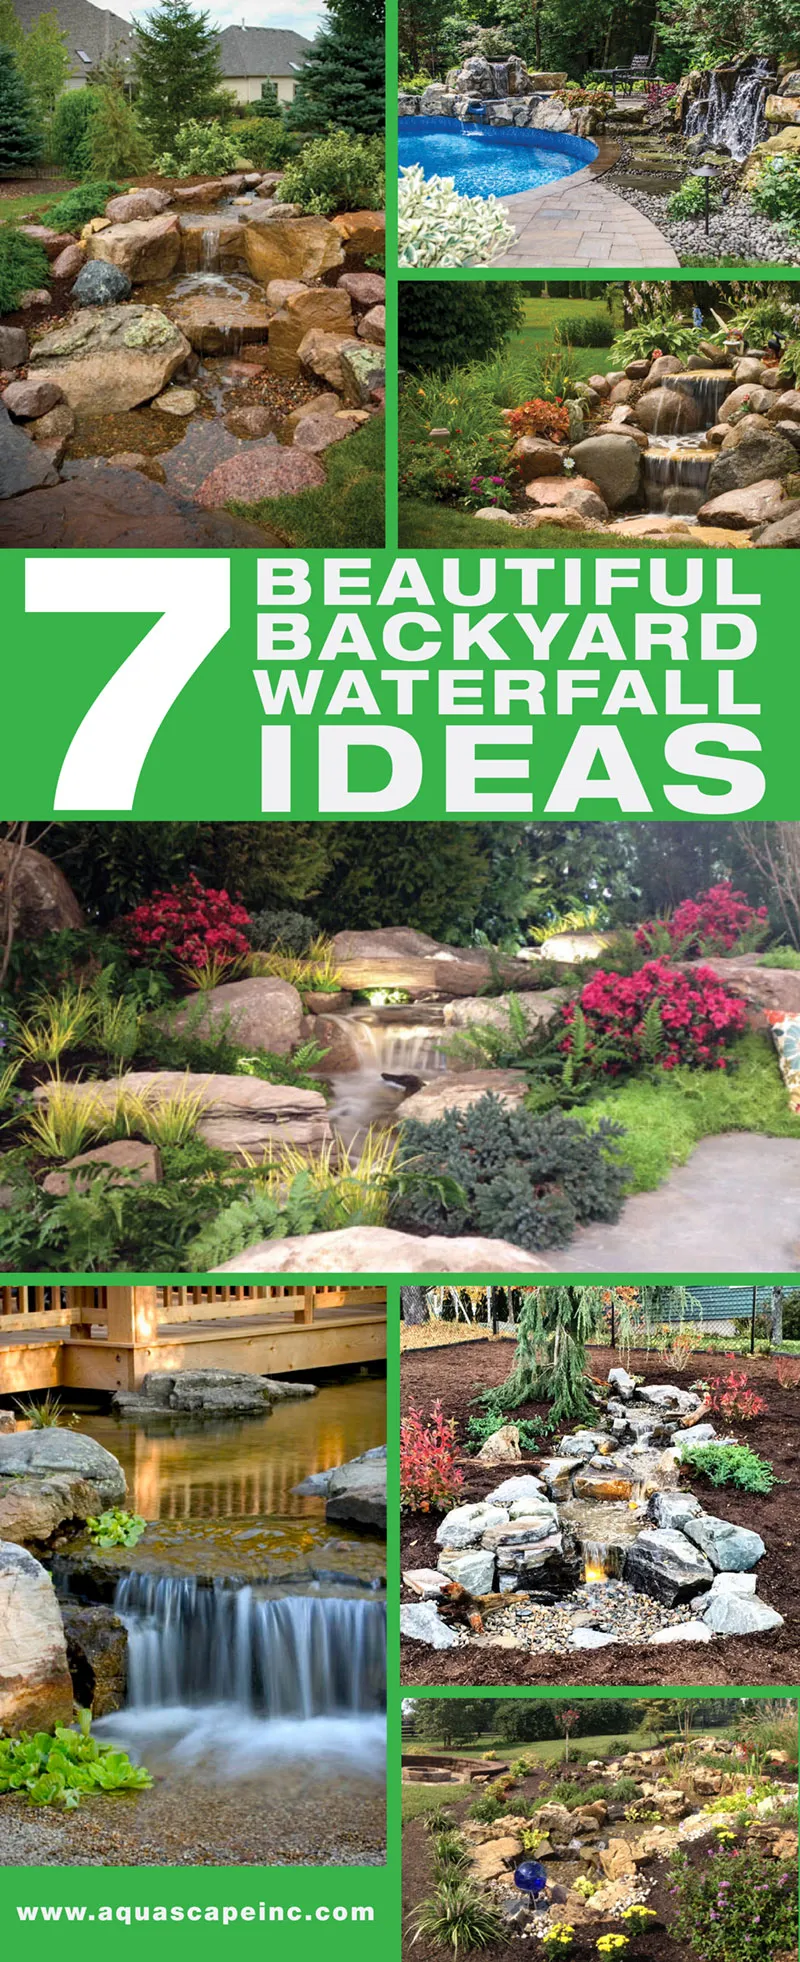 7 Beautiful Backyard Waterfall Ideas Aquascape Inc